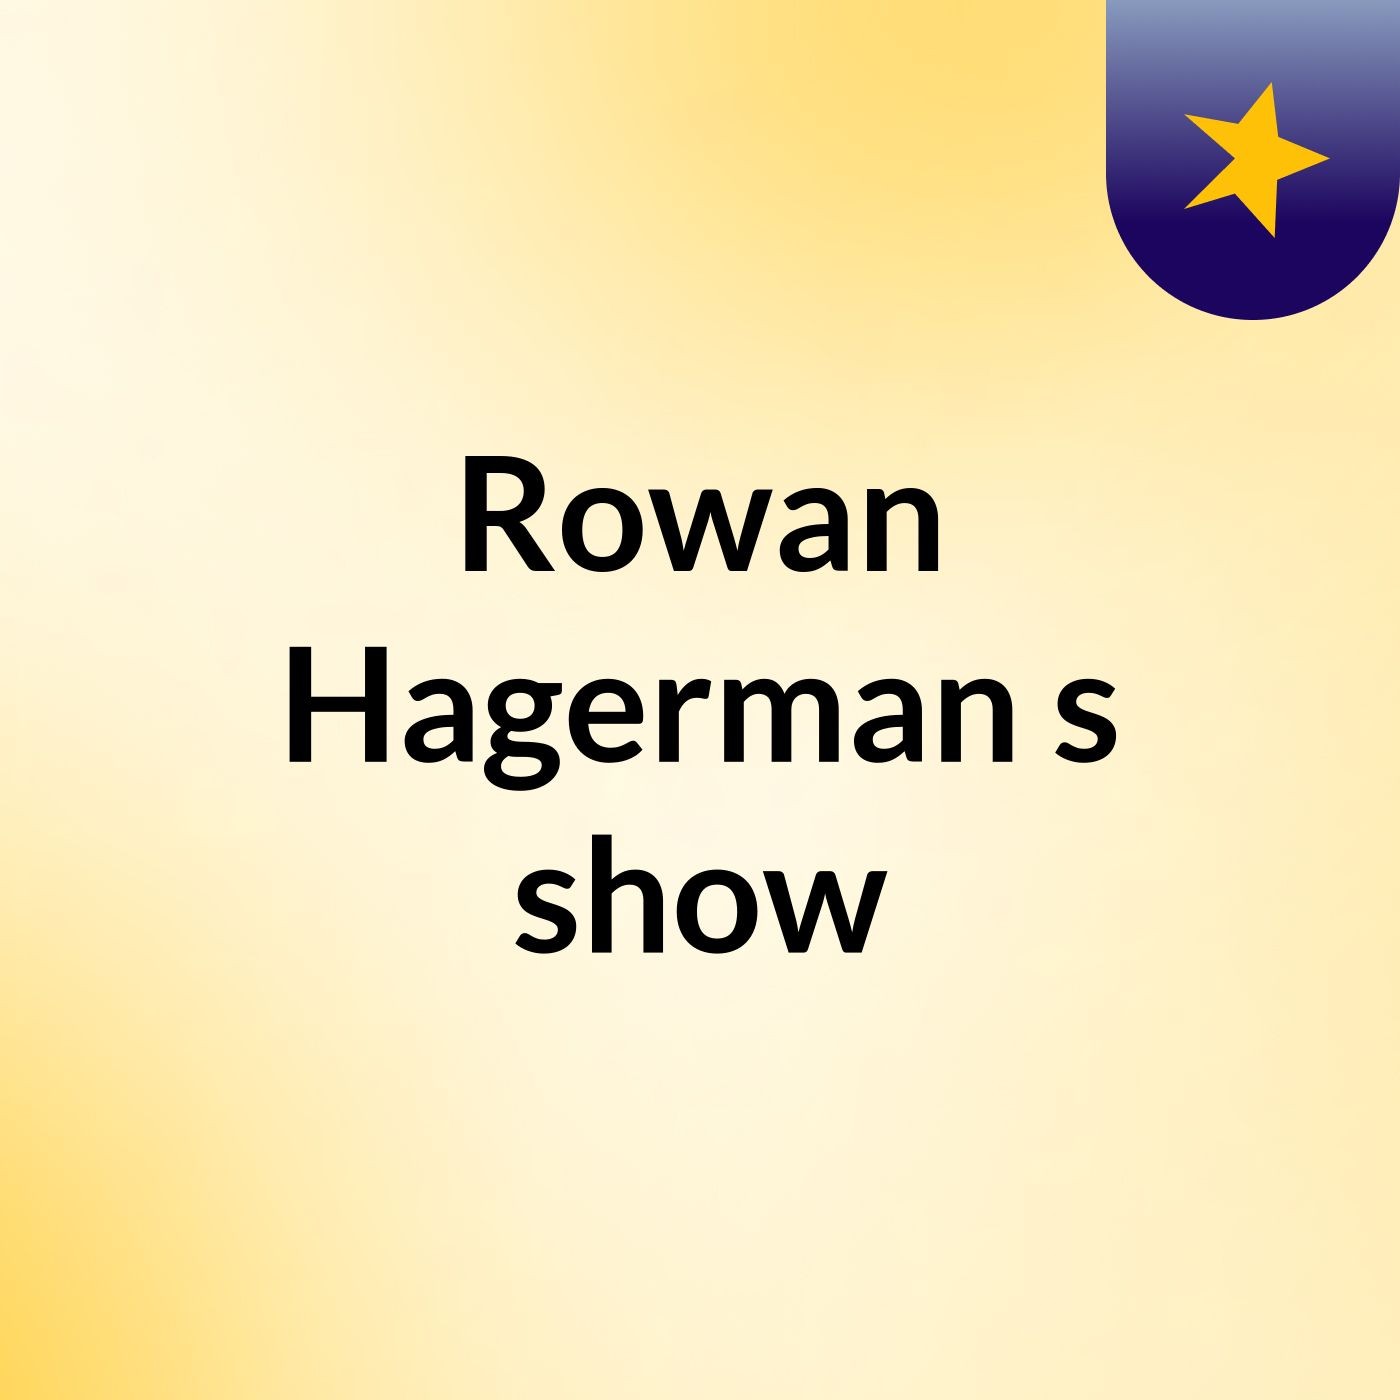 Rowan Hagerman's show